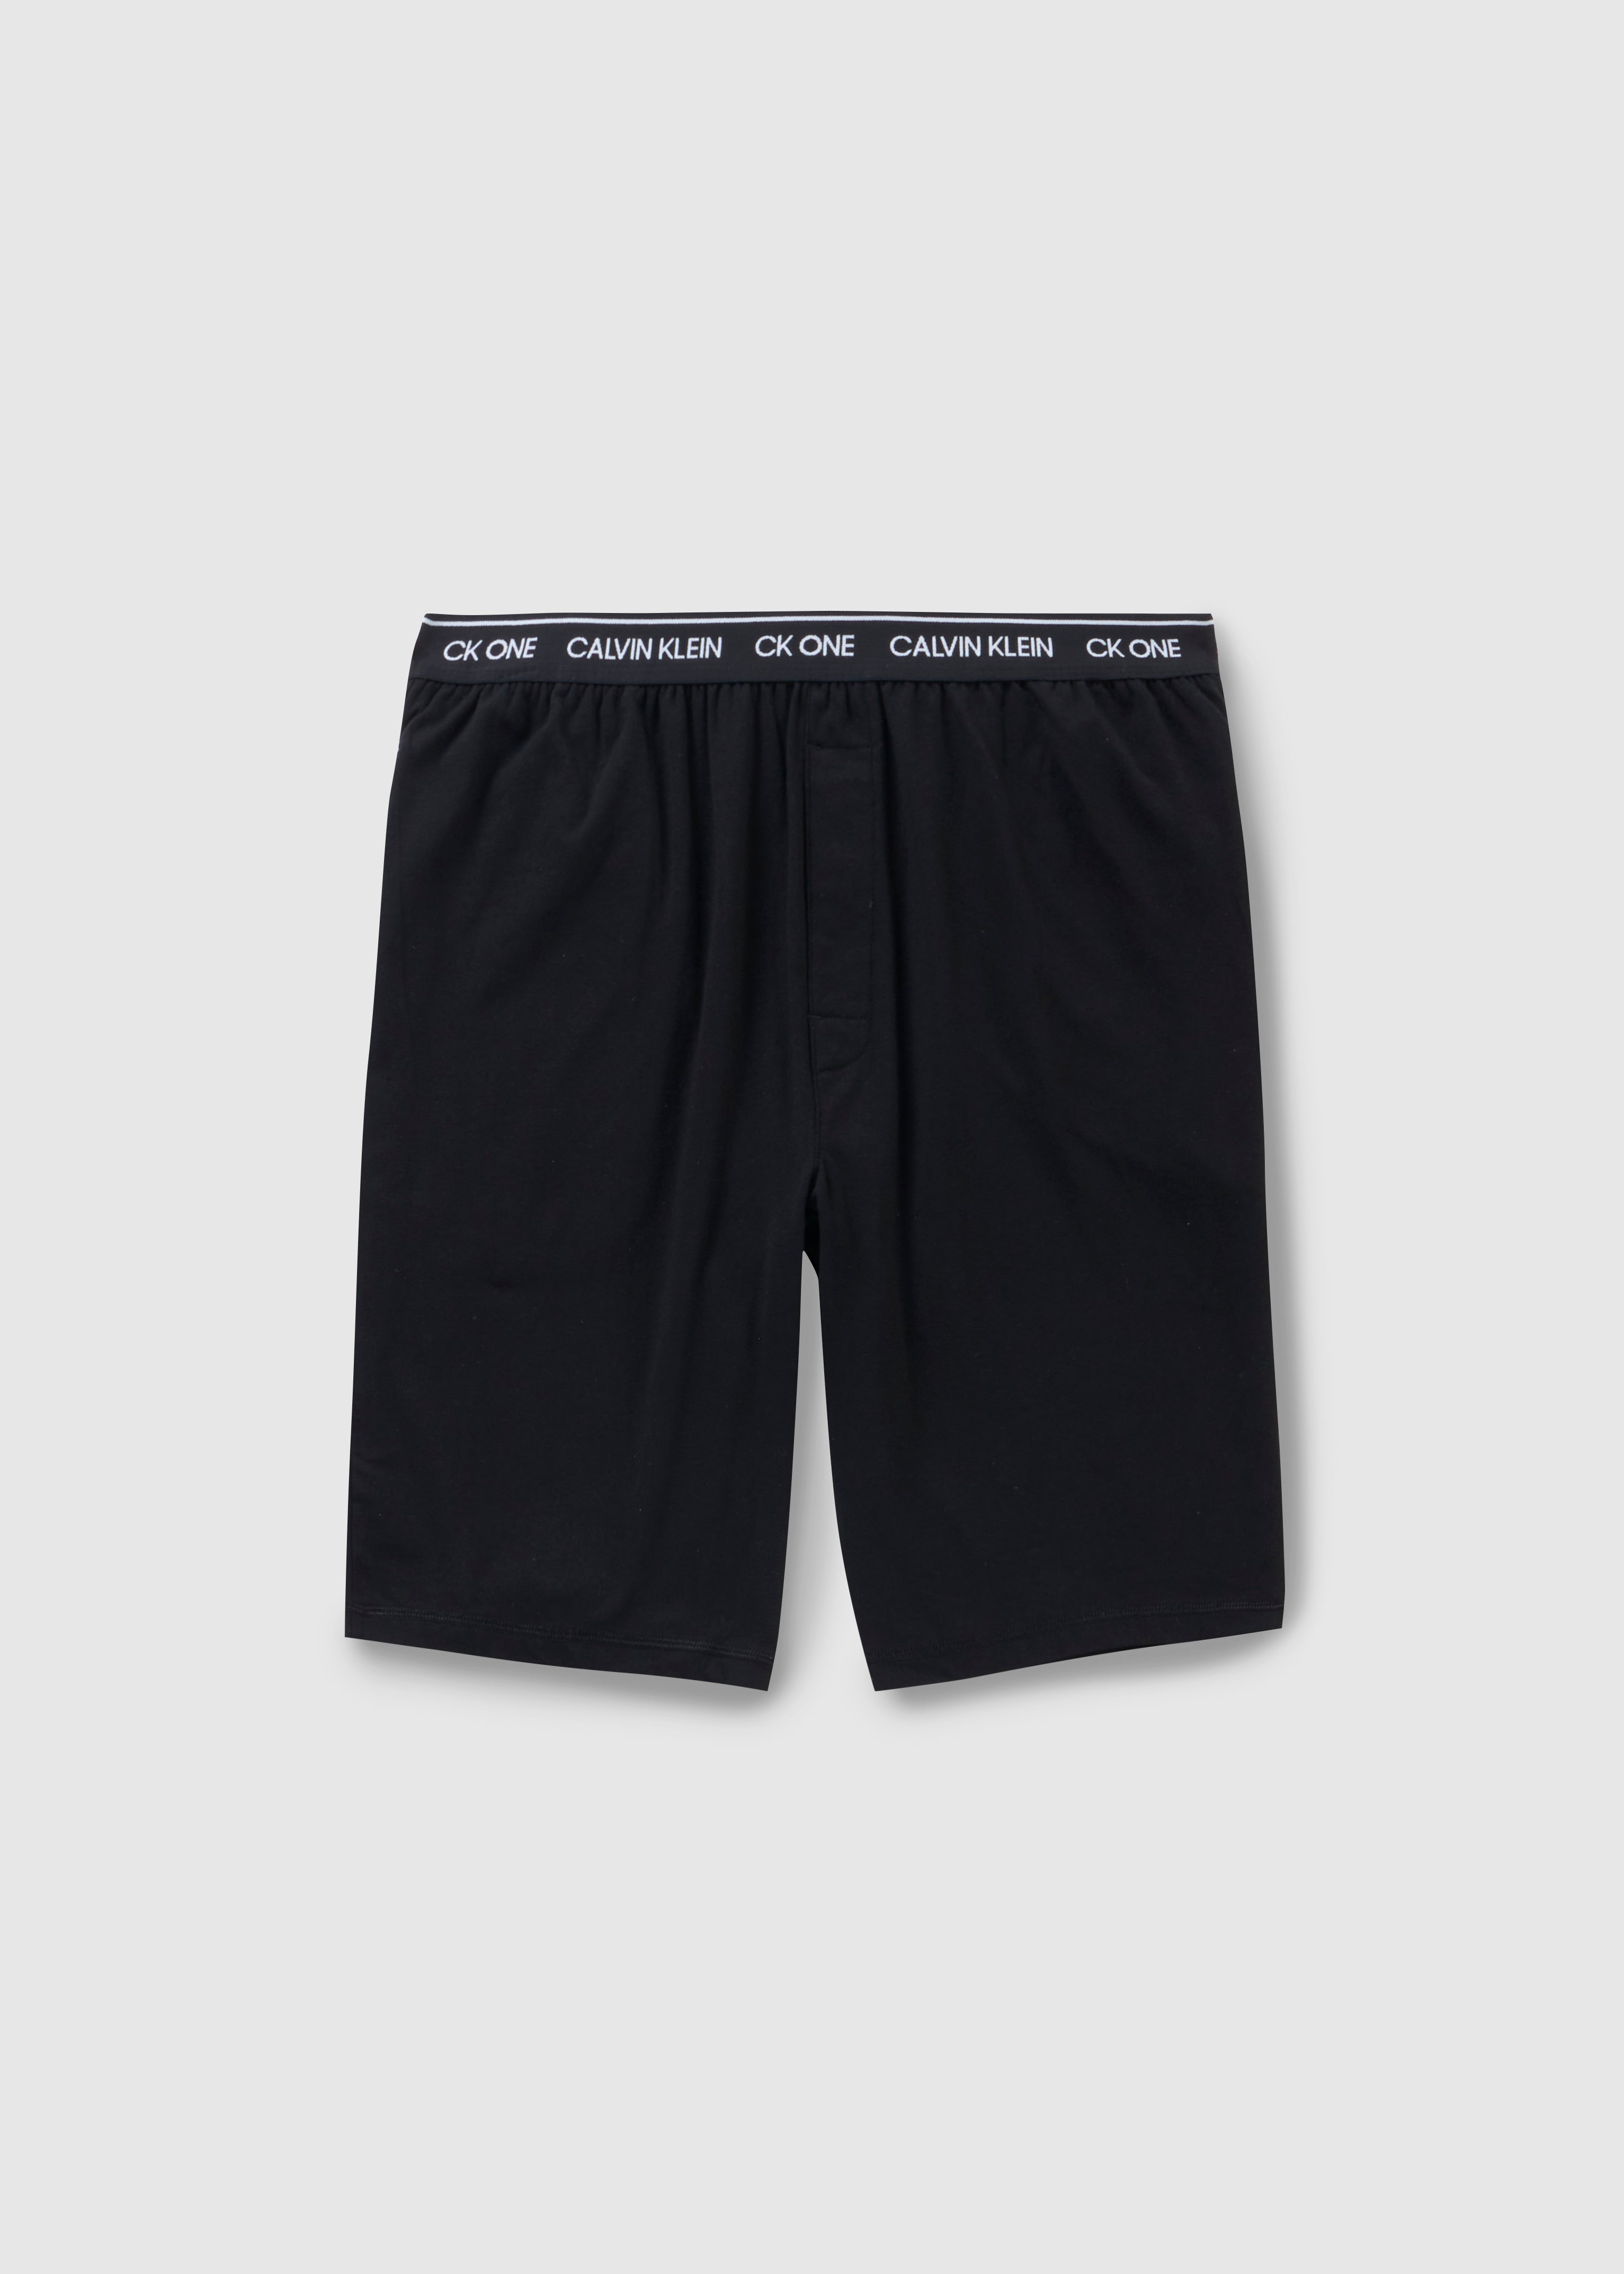 Image of Calvin Klein Mens Sleep Shorts In Black